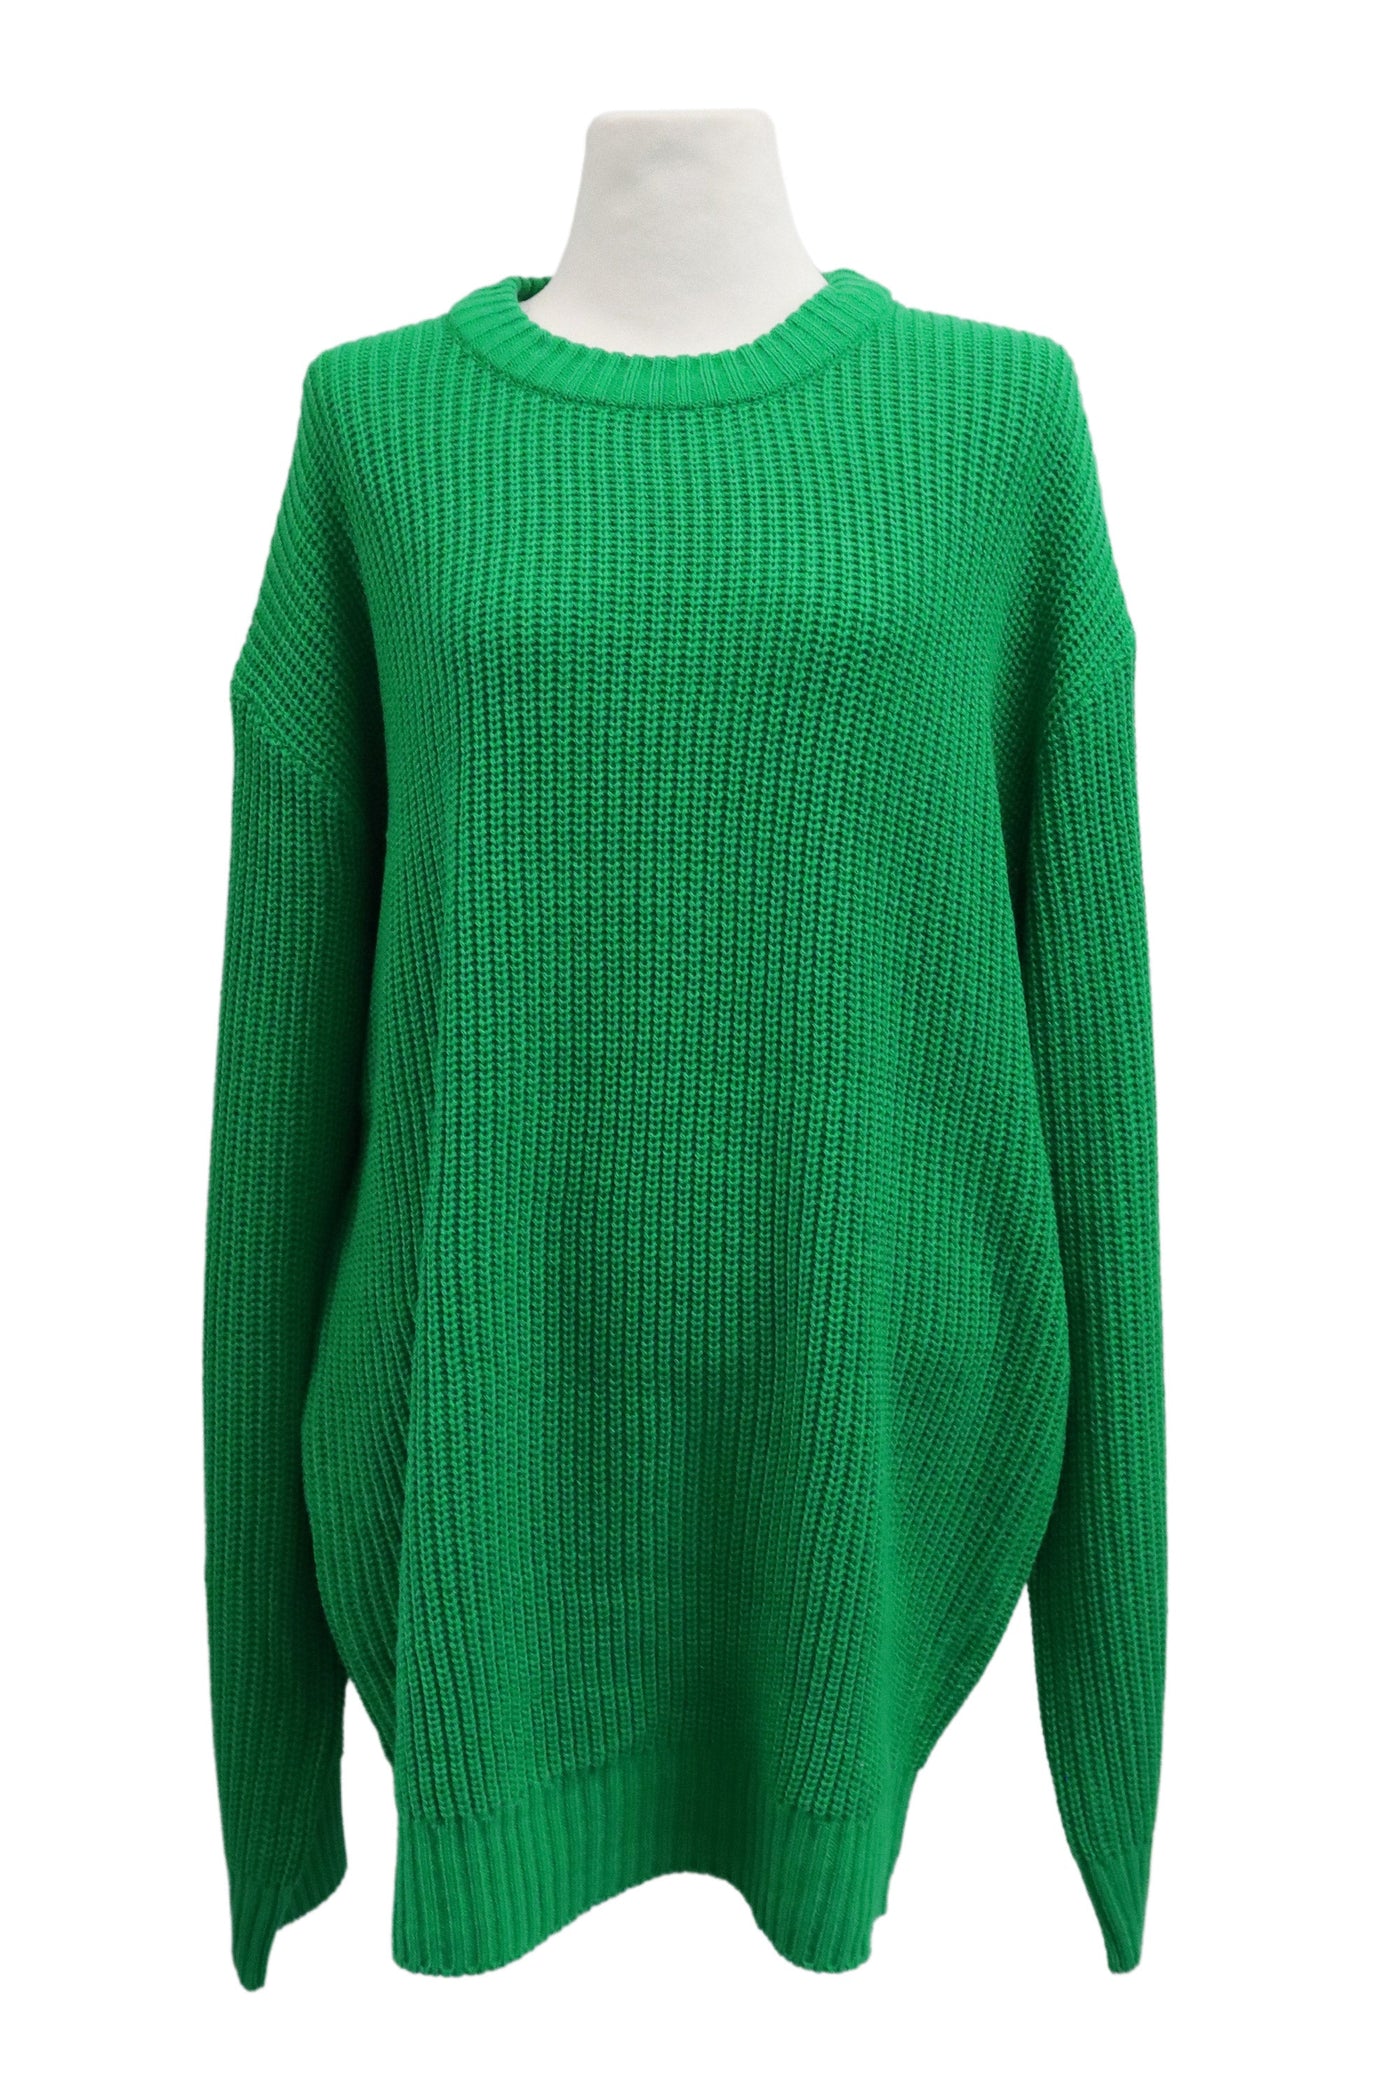 storets.com Logan Oversized Sweater Dress/Top